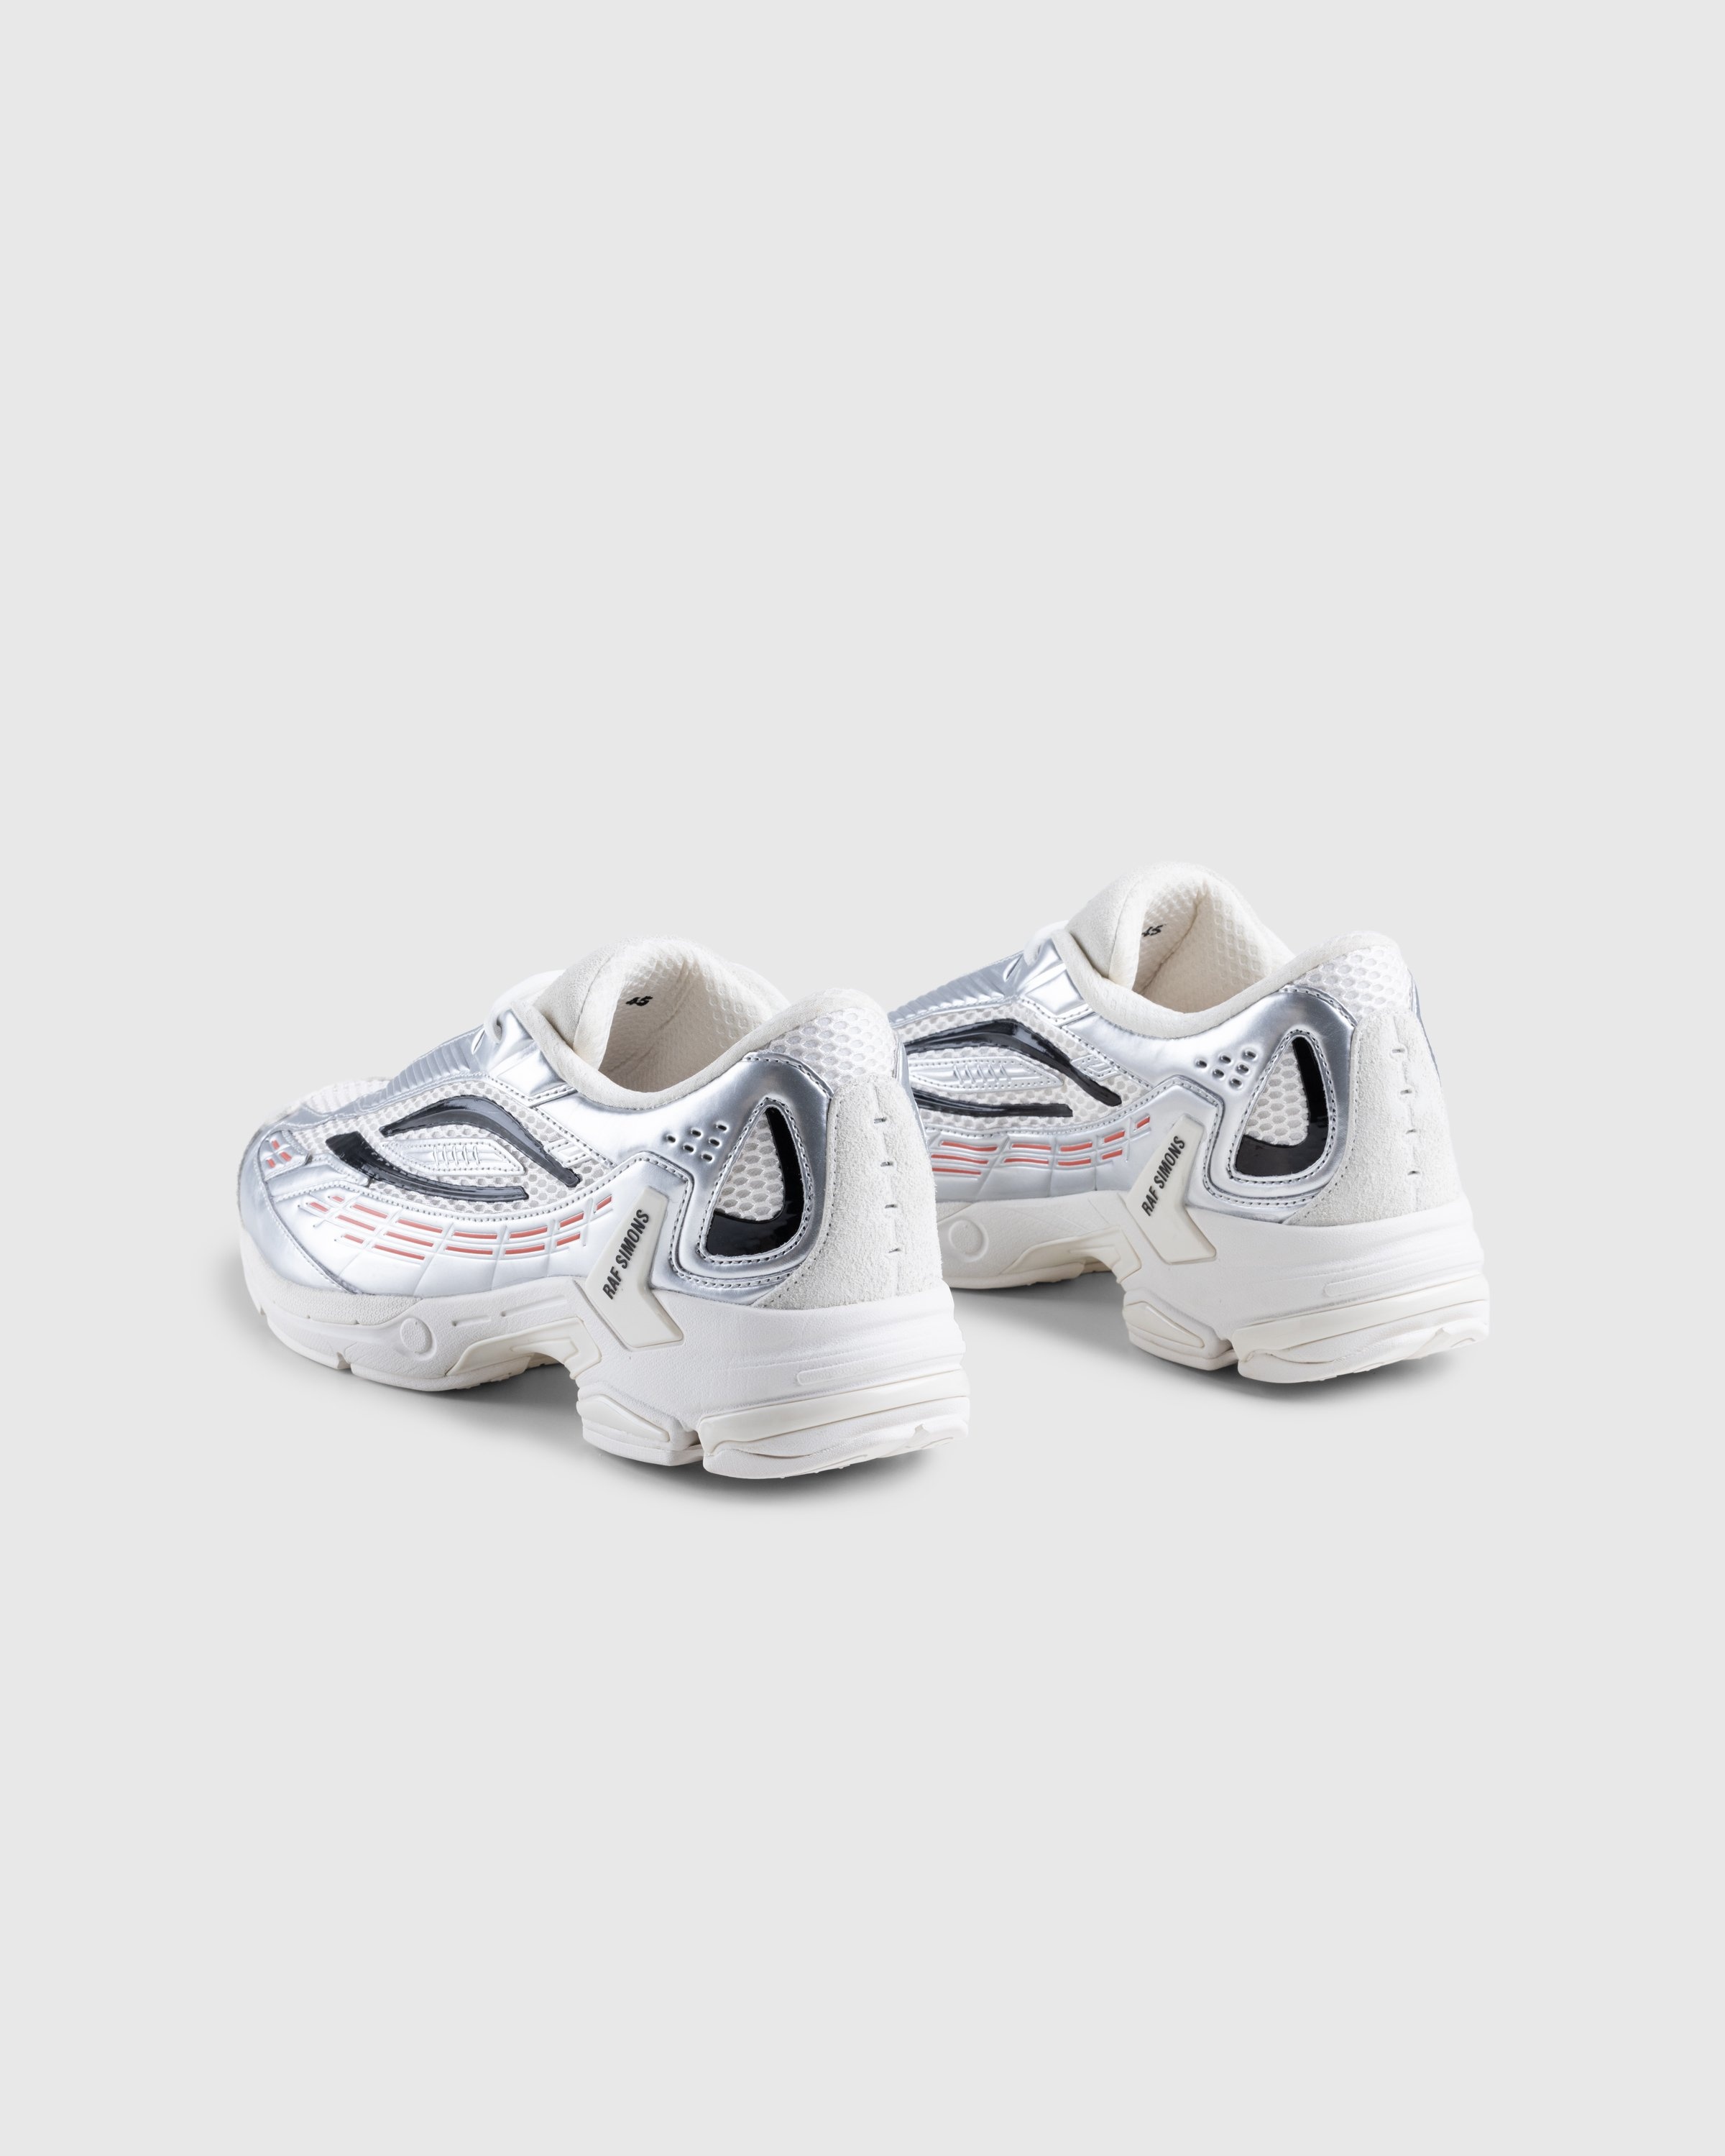 Raf Simons – Ultrasceptre Sneaker White Alyssum/Grey Violet - Sneakers - White - Image 4